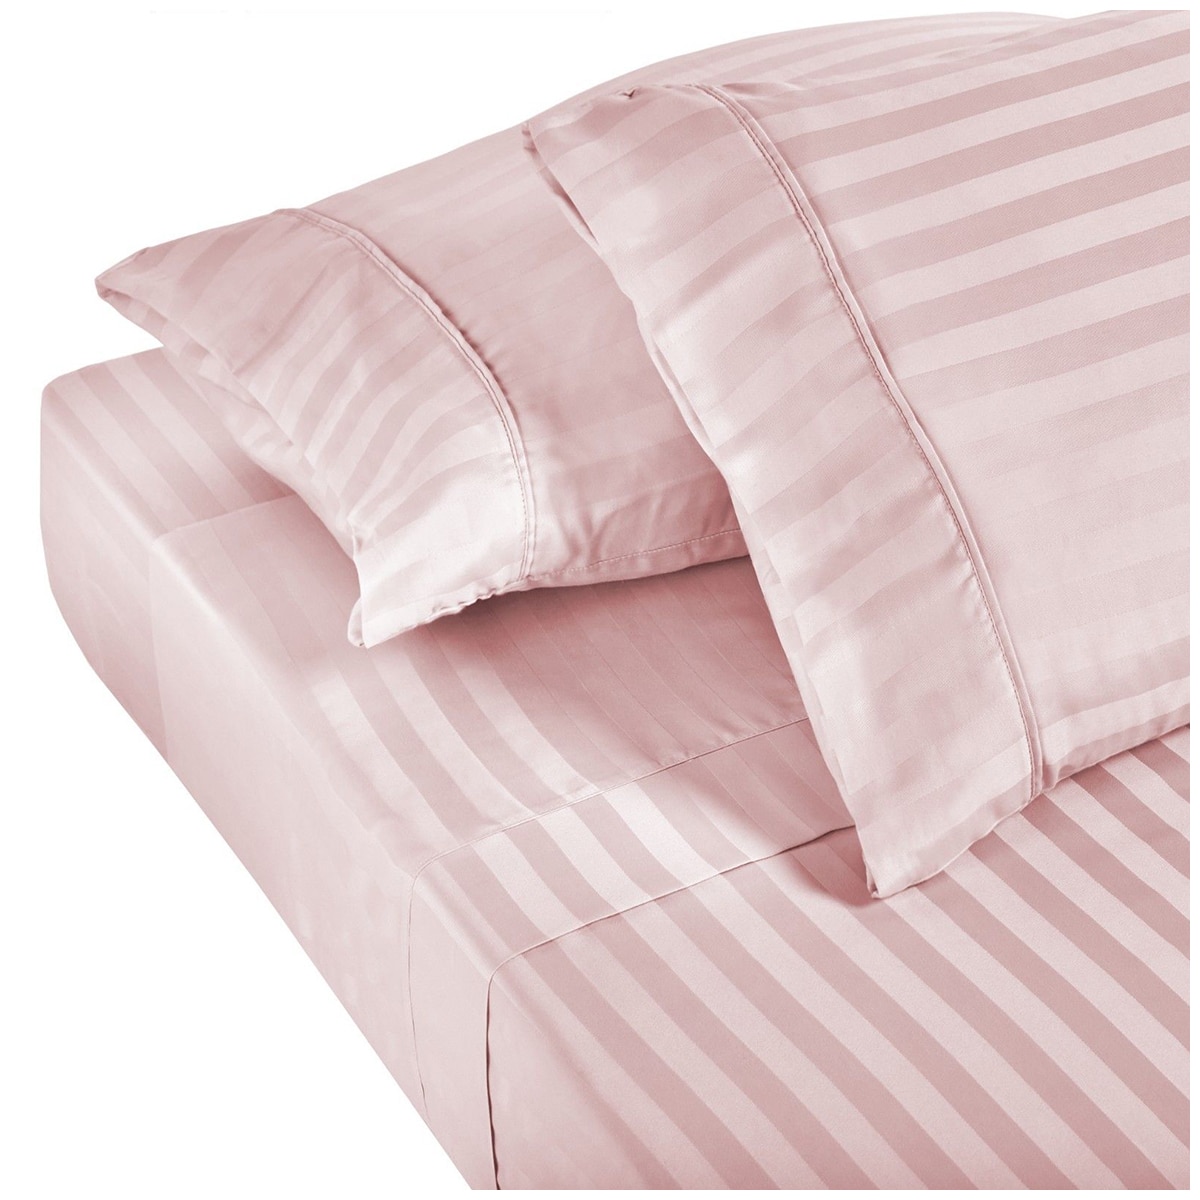 Bdirect Royal Comfort 1200 Thread Count Damask Stripe Cotton Blend Sheet Set - King - Blush